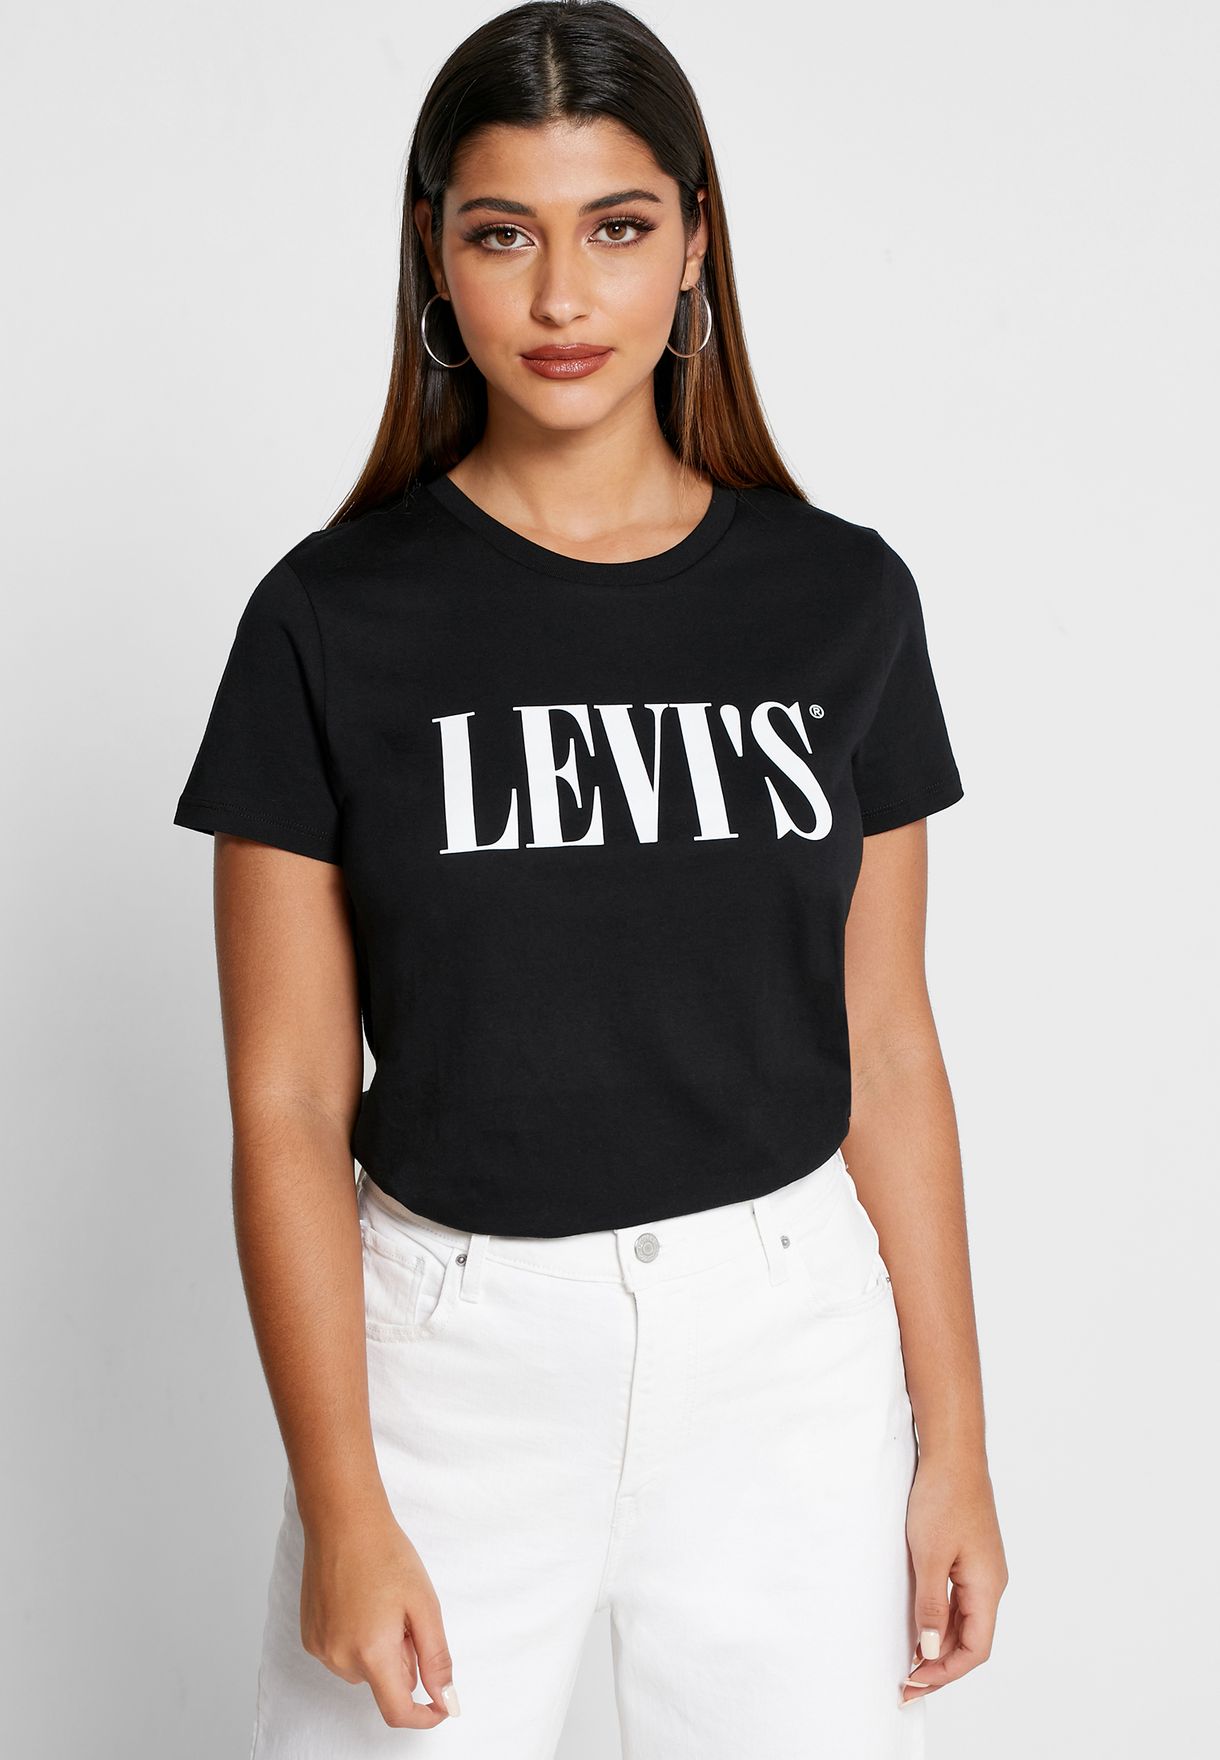 levi's logo t shirt women's